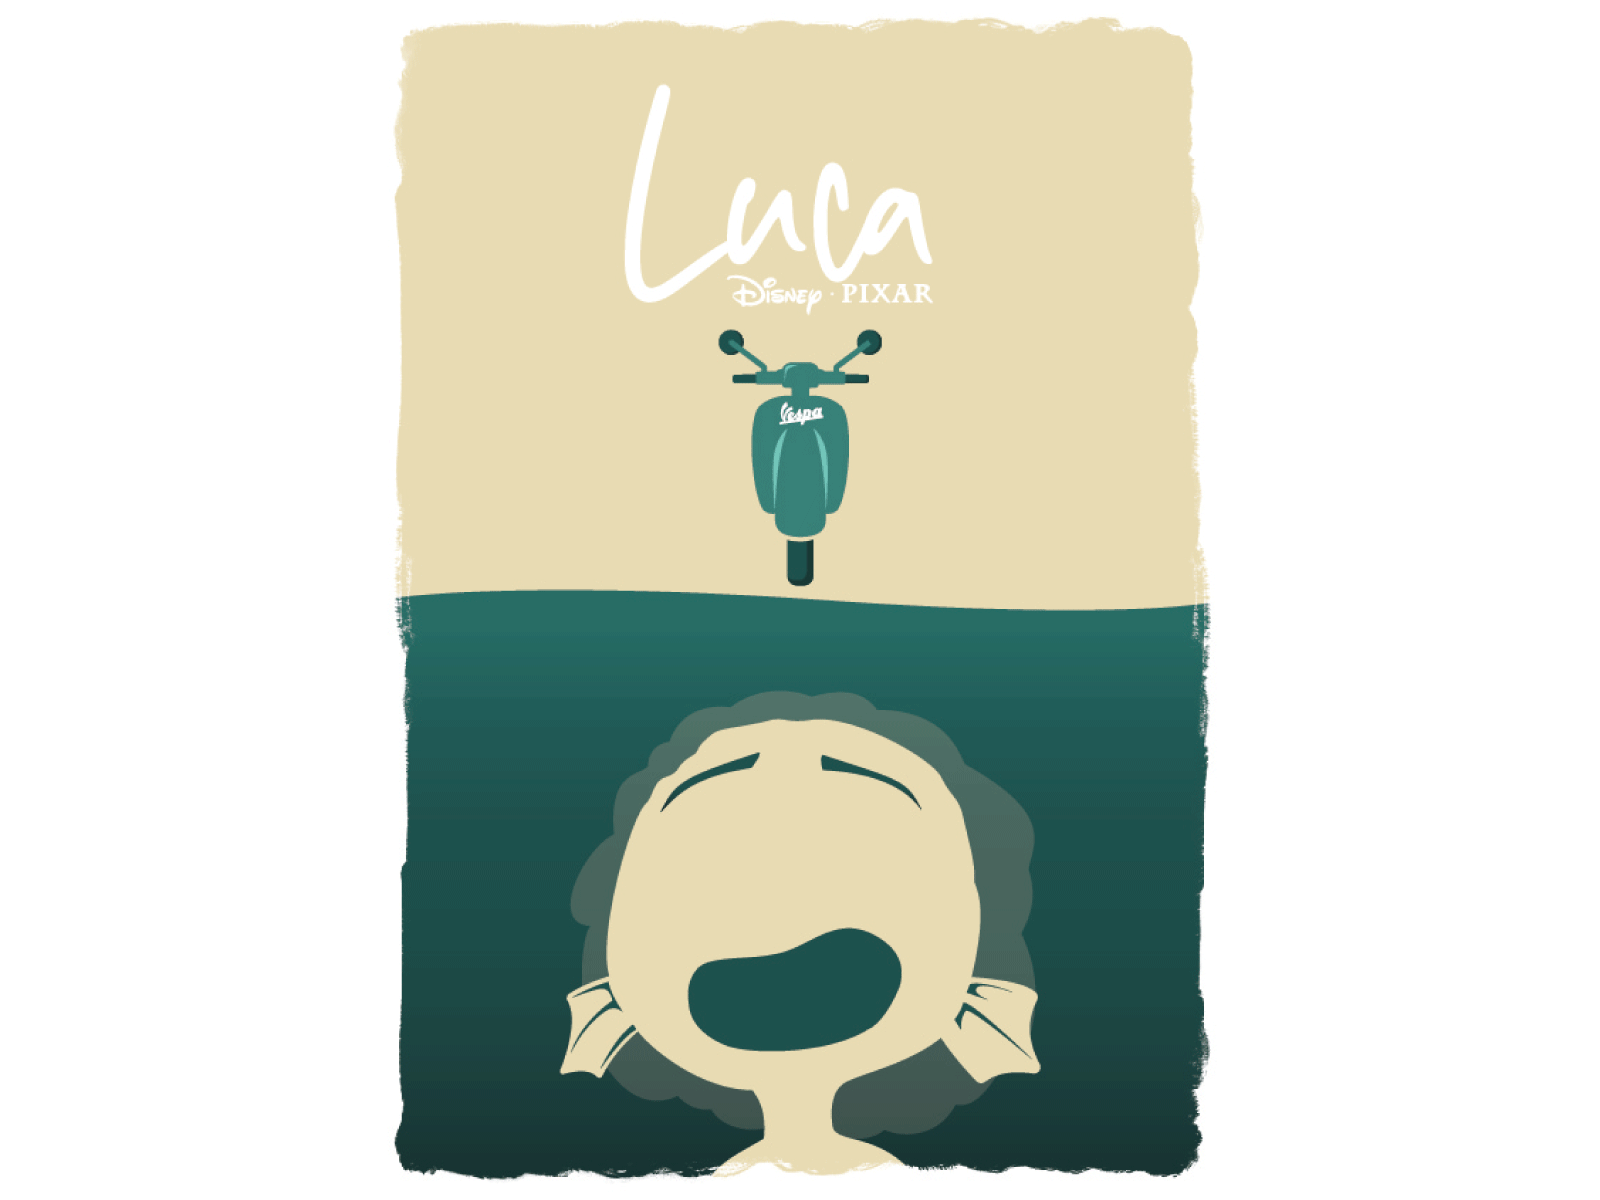 'Luca' Alternative Movie Poster ai alternative alternative movie poster design disney illustration luca movie poster vector